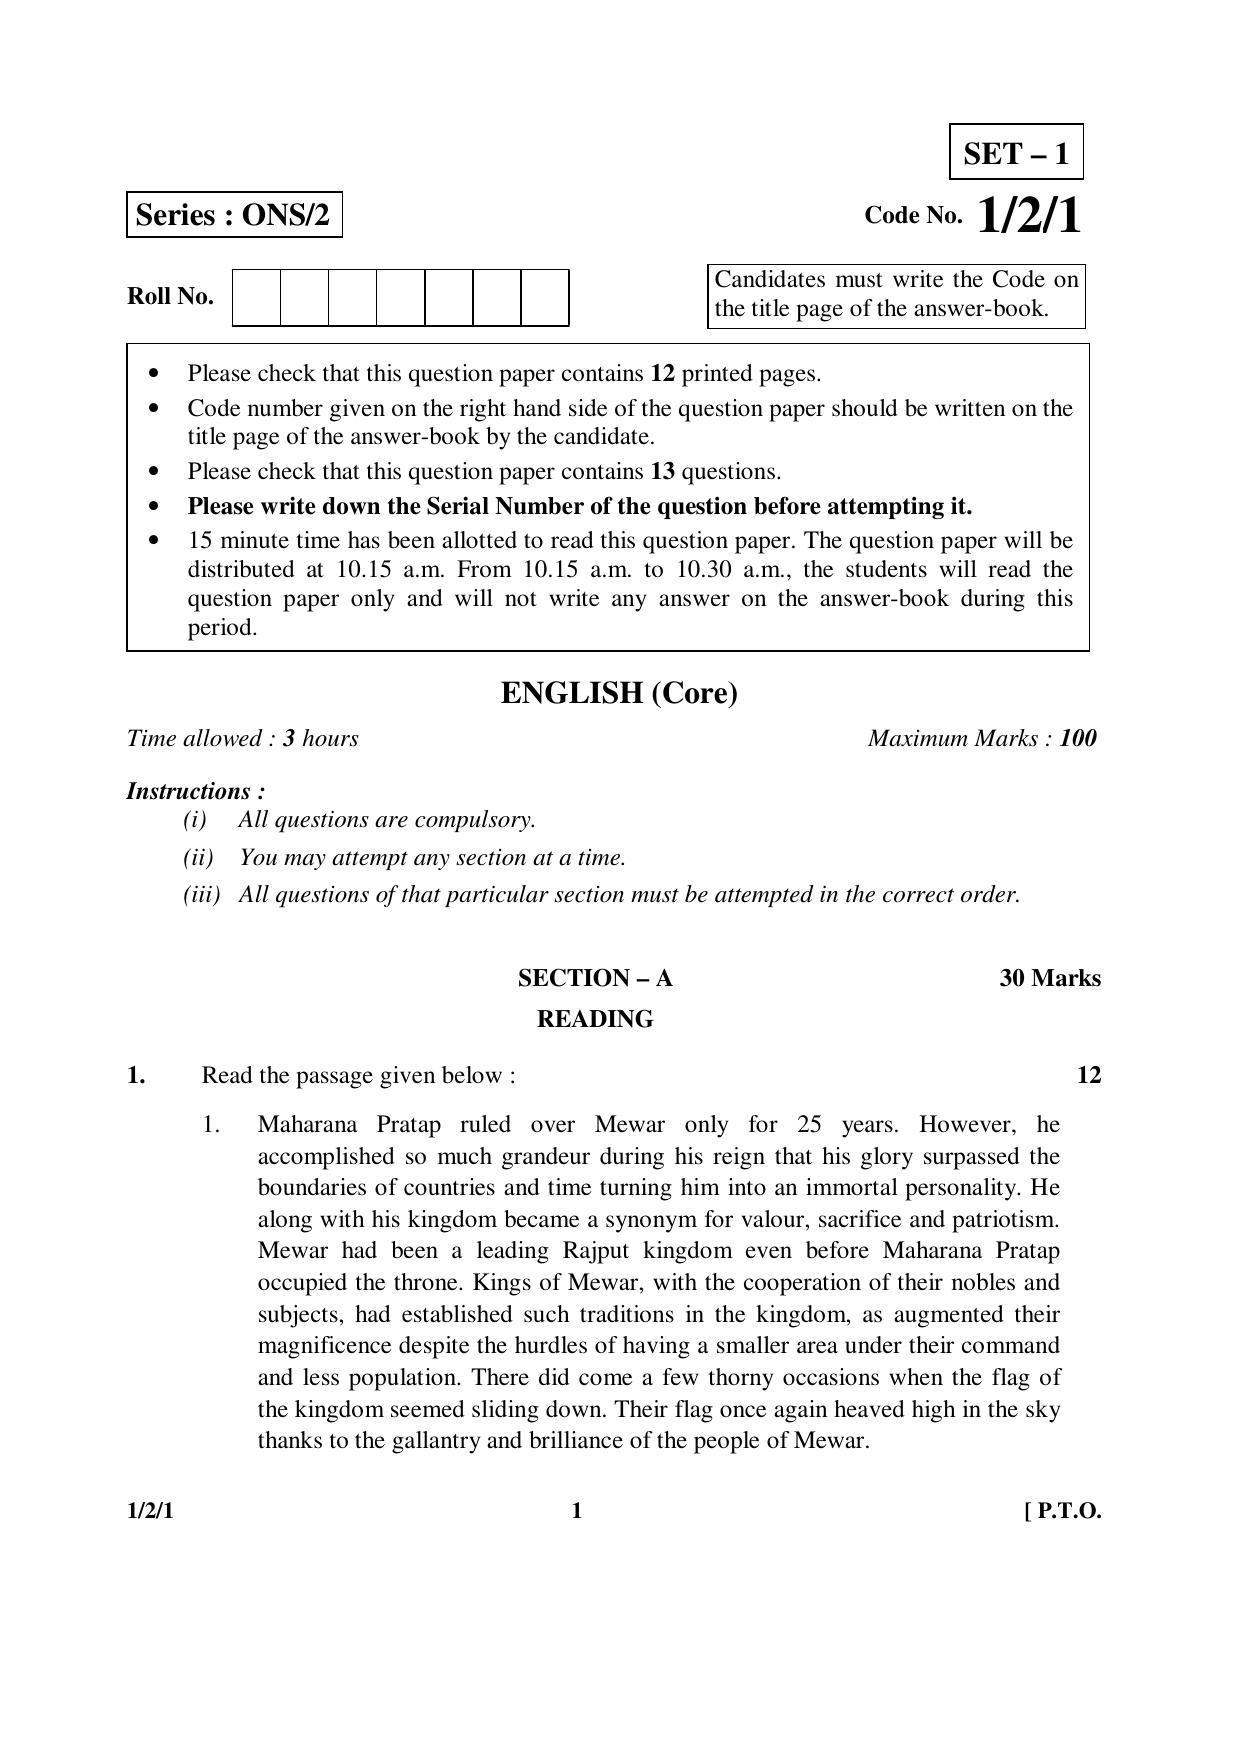 CBSE Class 12 1-2-1 ENGLISH CORE 2016 Question Paper - Page 1